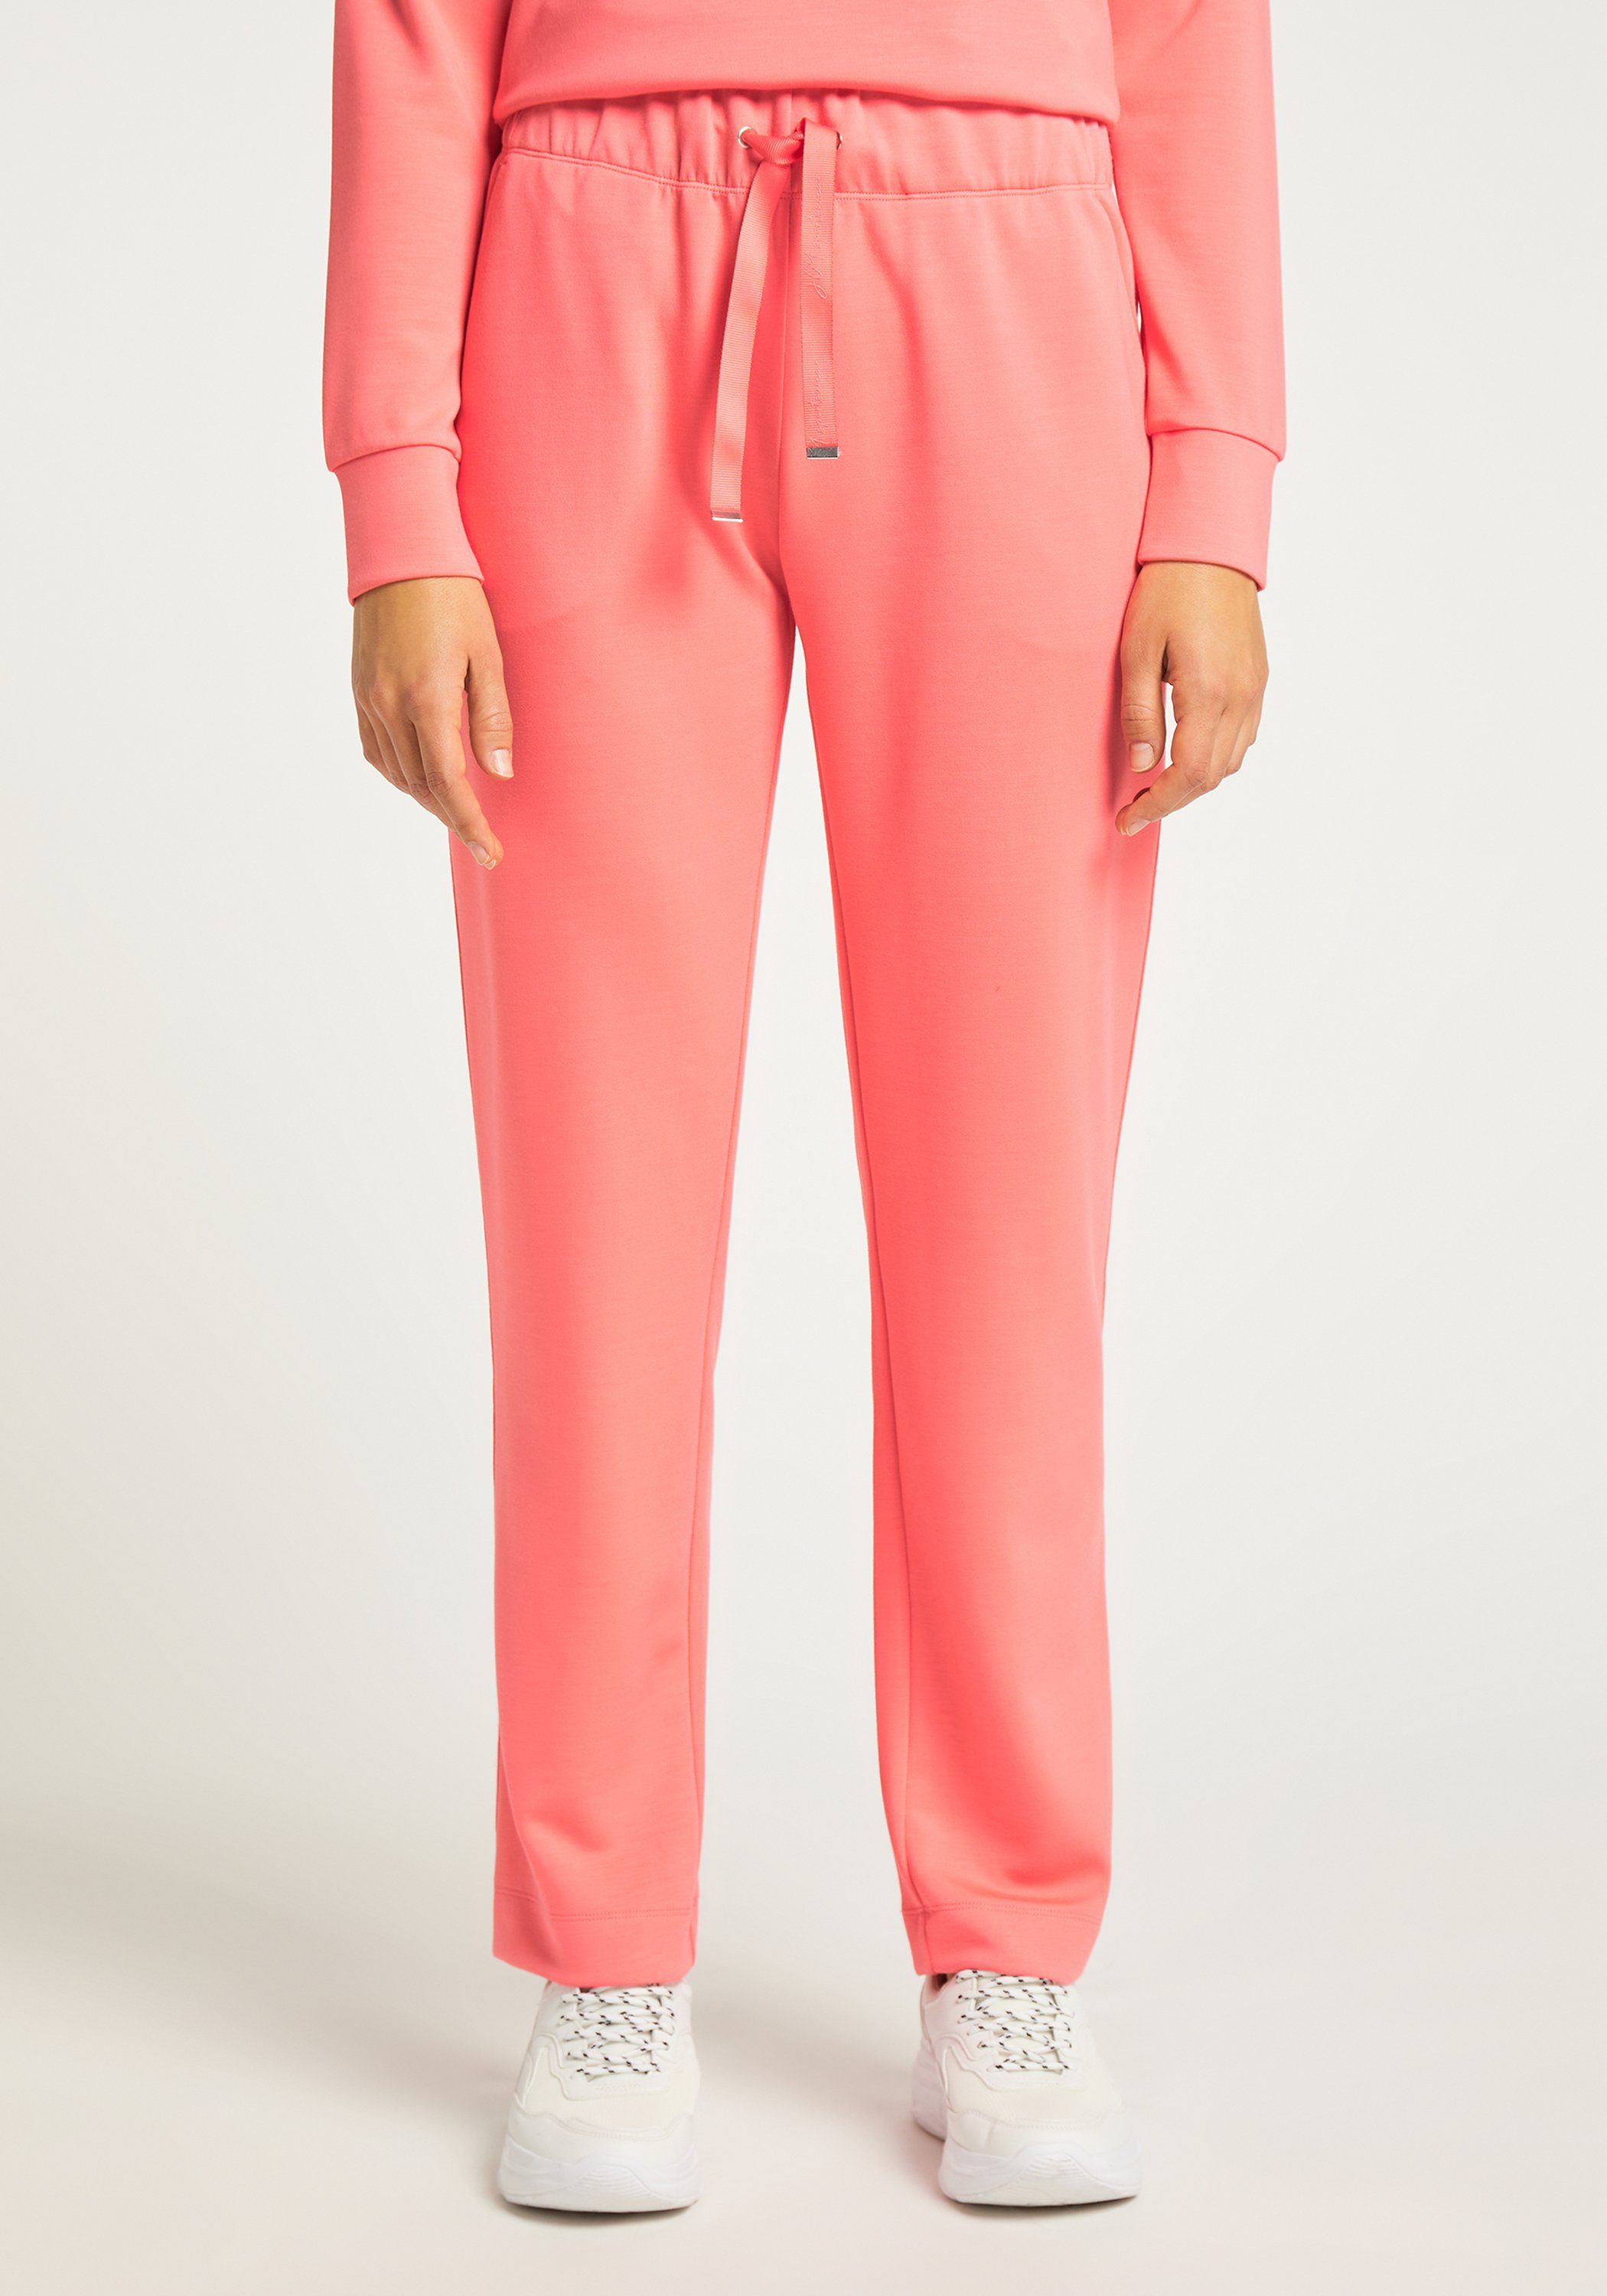 Joy Sportswear Sporthose Hose AURORA coral pink